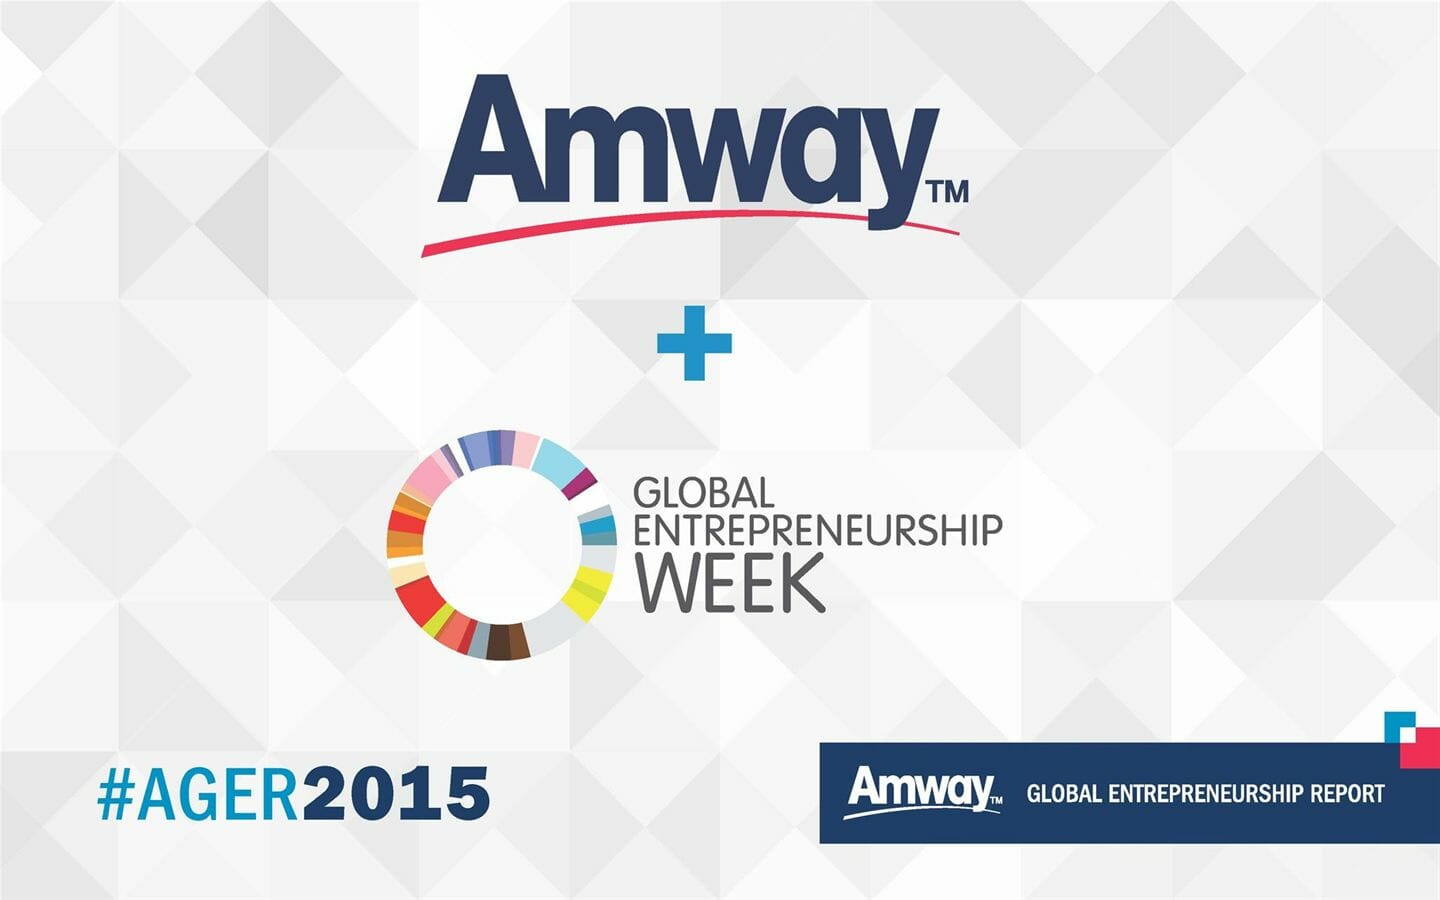 Amway partners with Global Entrepreneurship Week